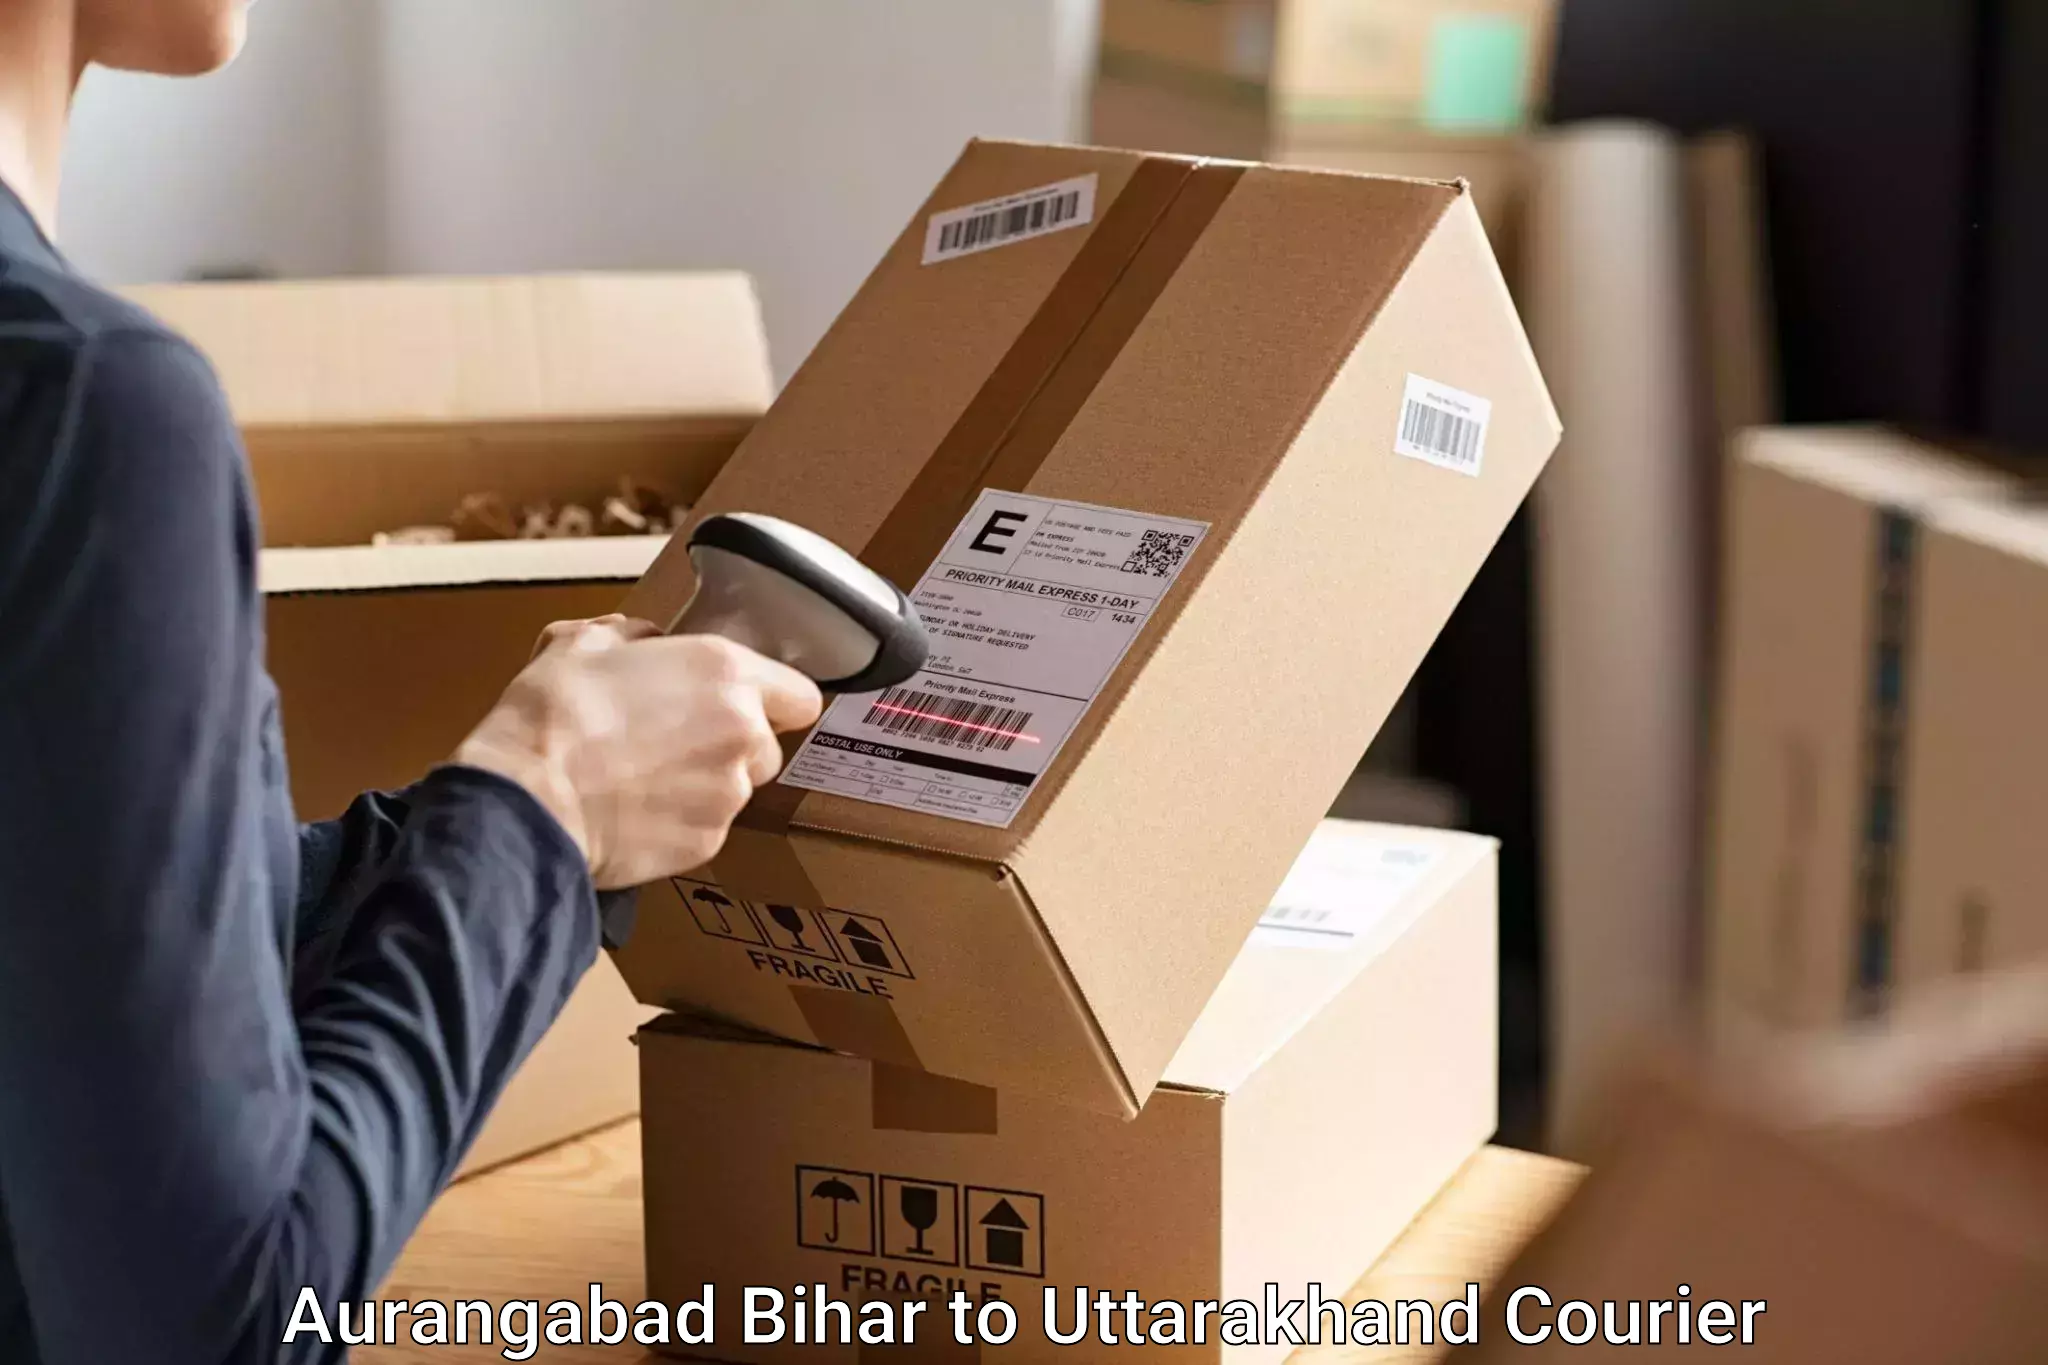 Baggage transport scheduler Aurangabad Bihar to Uttarakhand